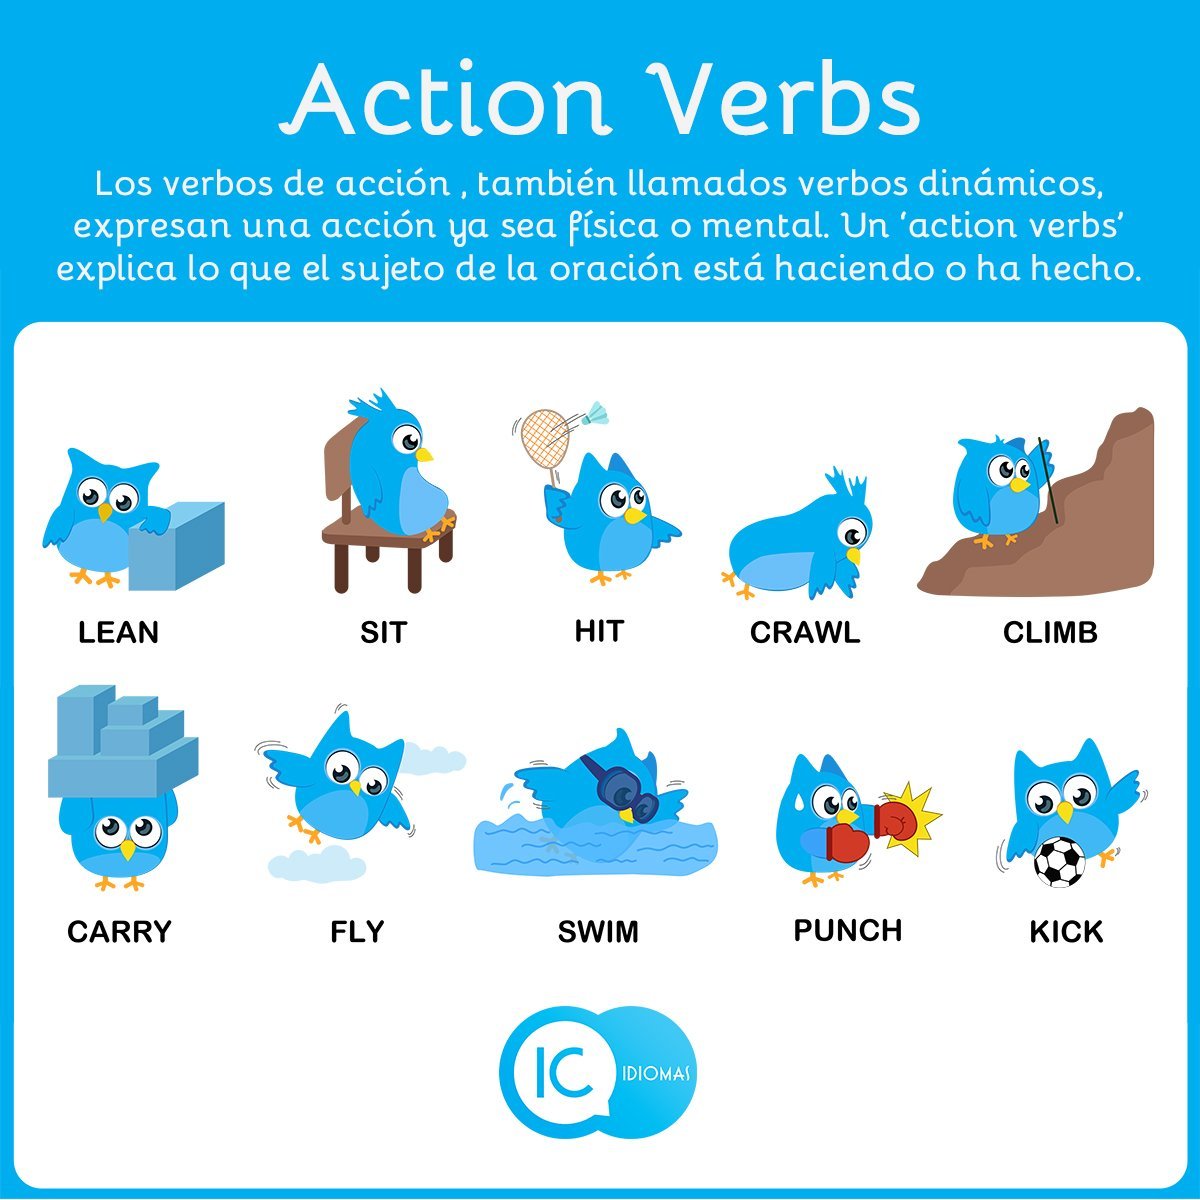 Action verbs en inglés - IC Idiomas. Tu blog para aprender inglés